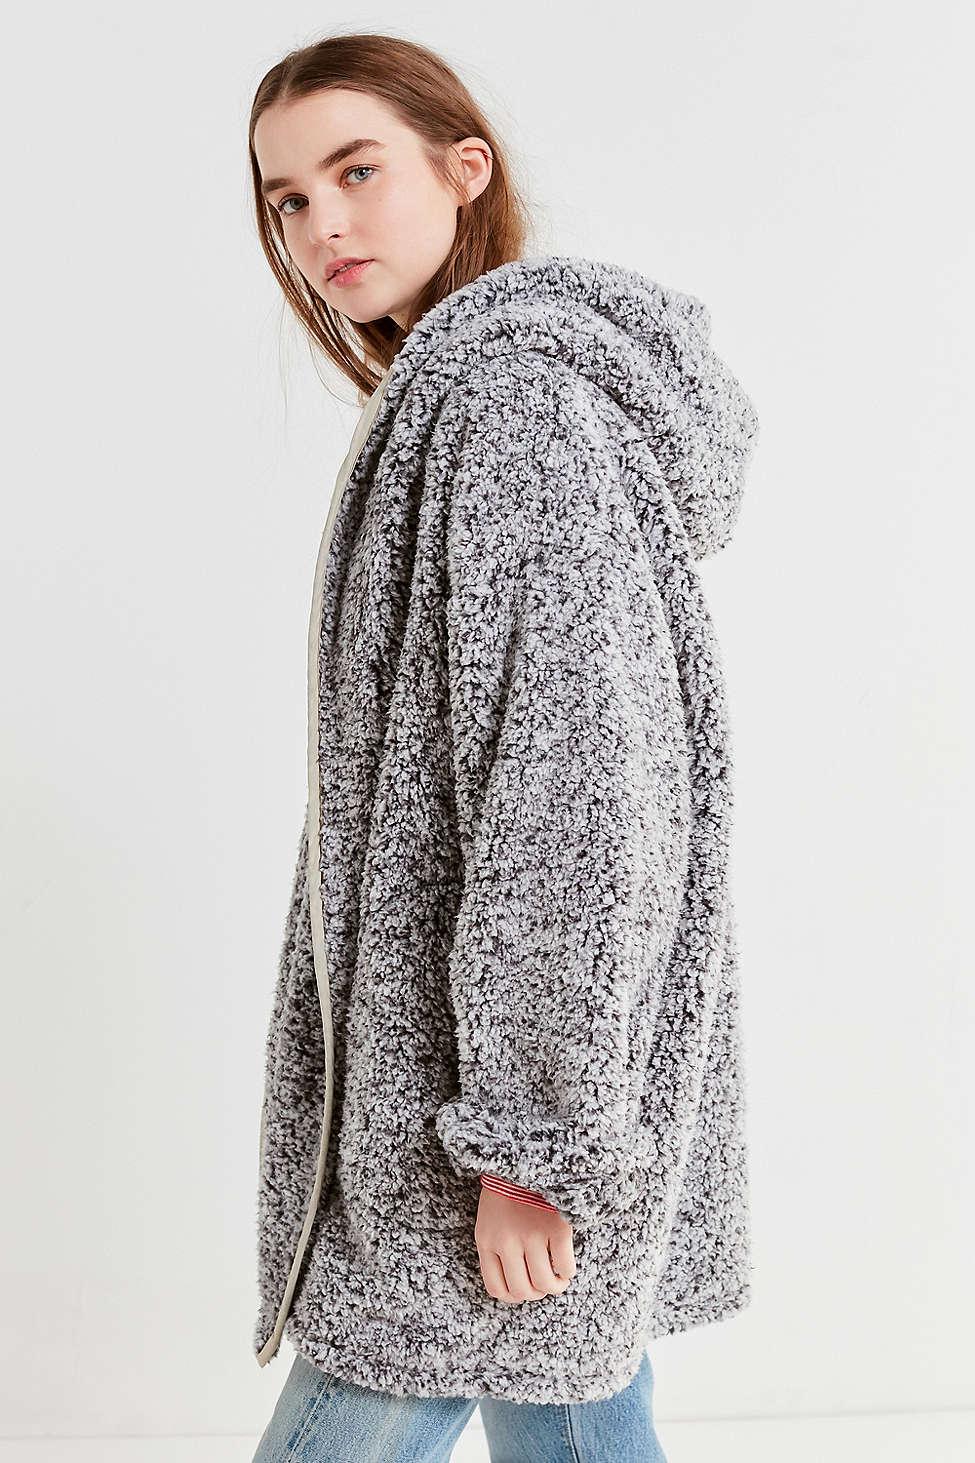 Urban Outfitters Fleece Uo Shaila Oversized Fuzzy Jacket in Grey (Gray ...